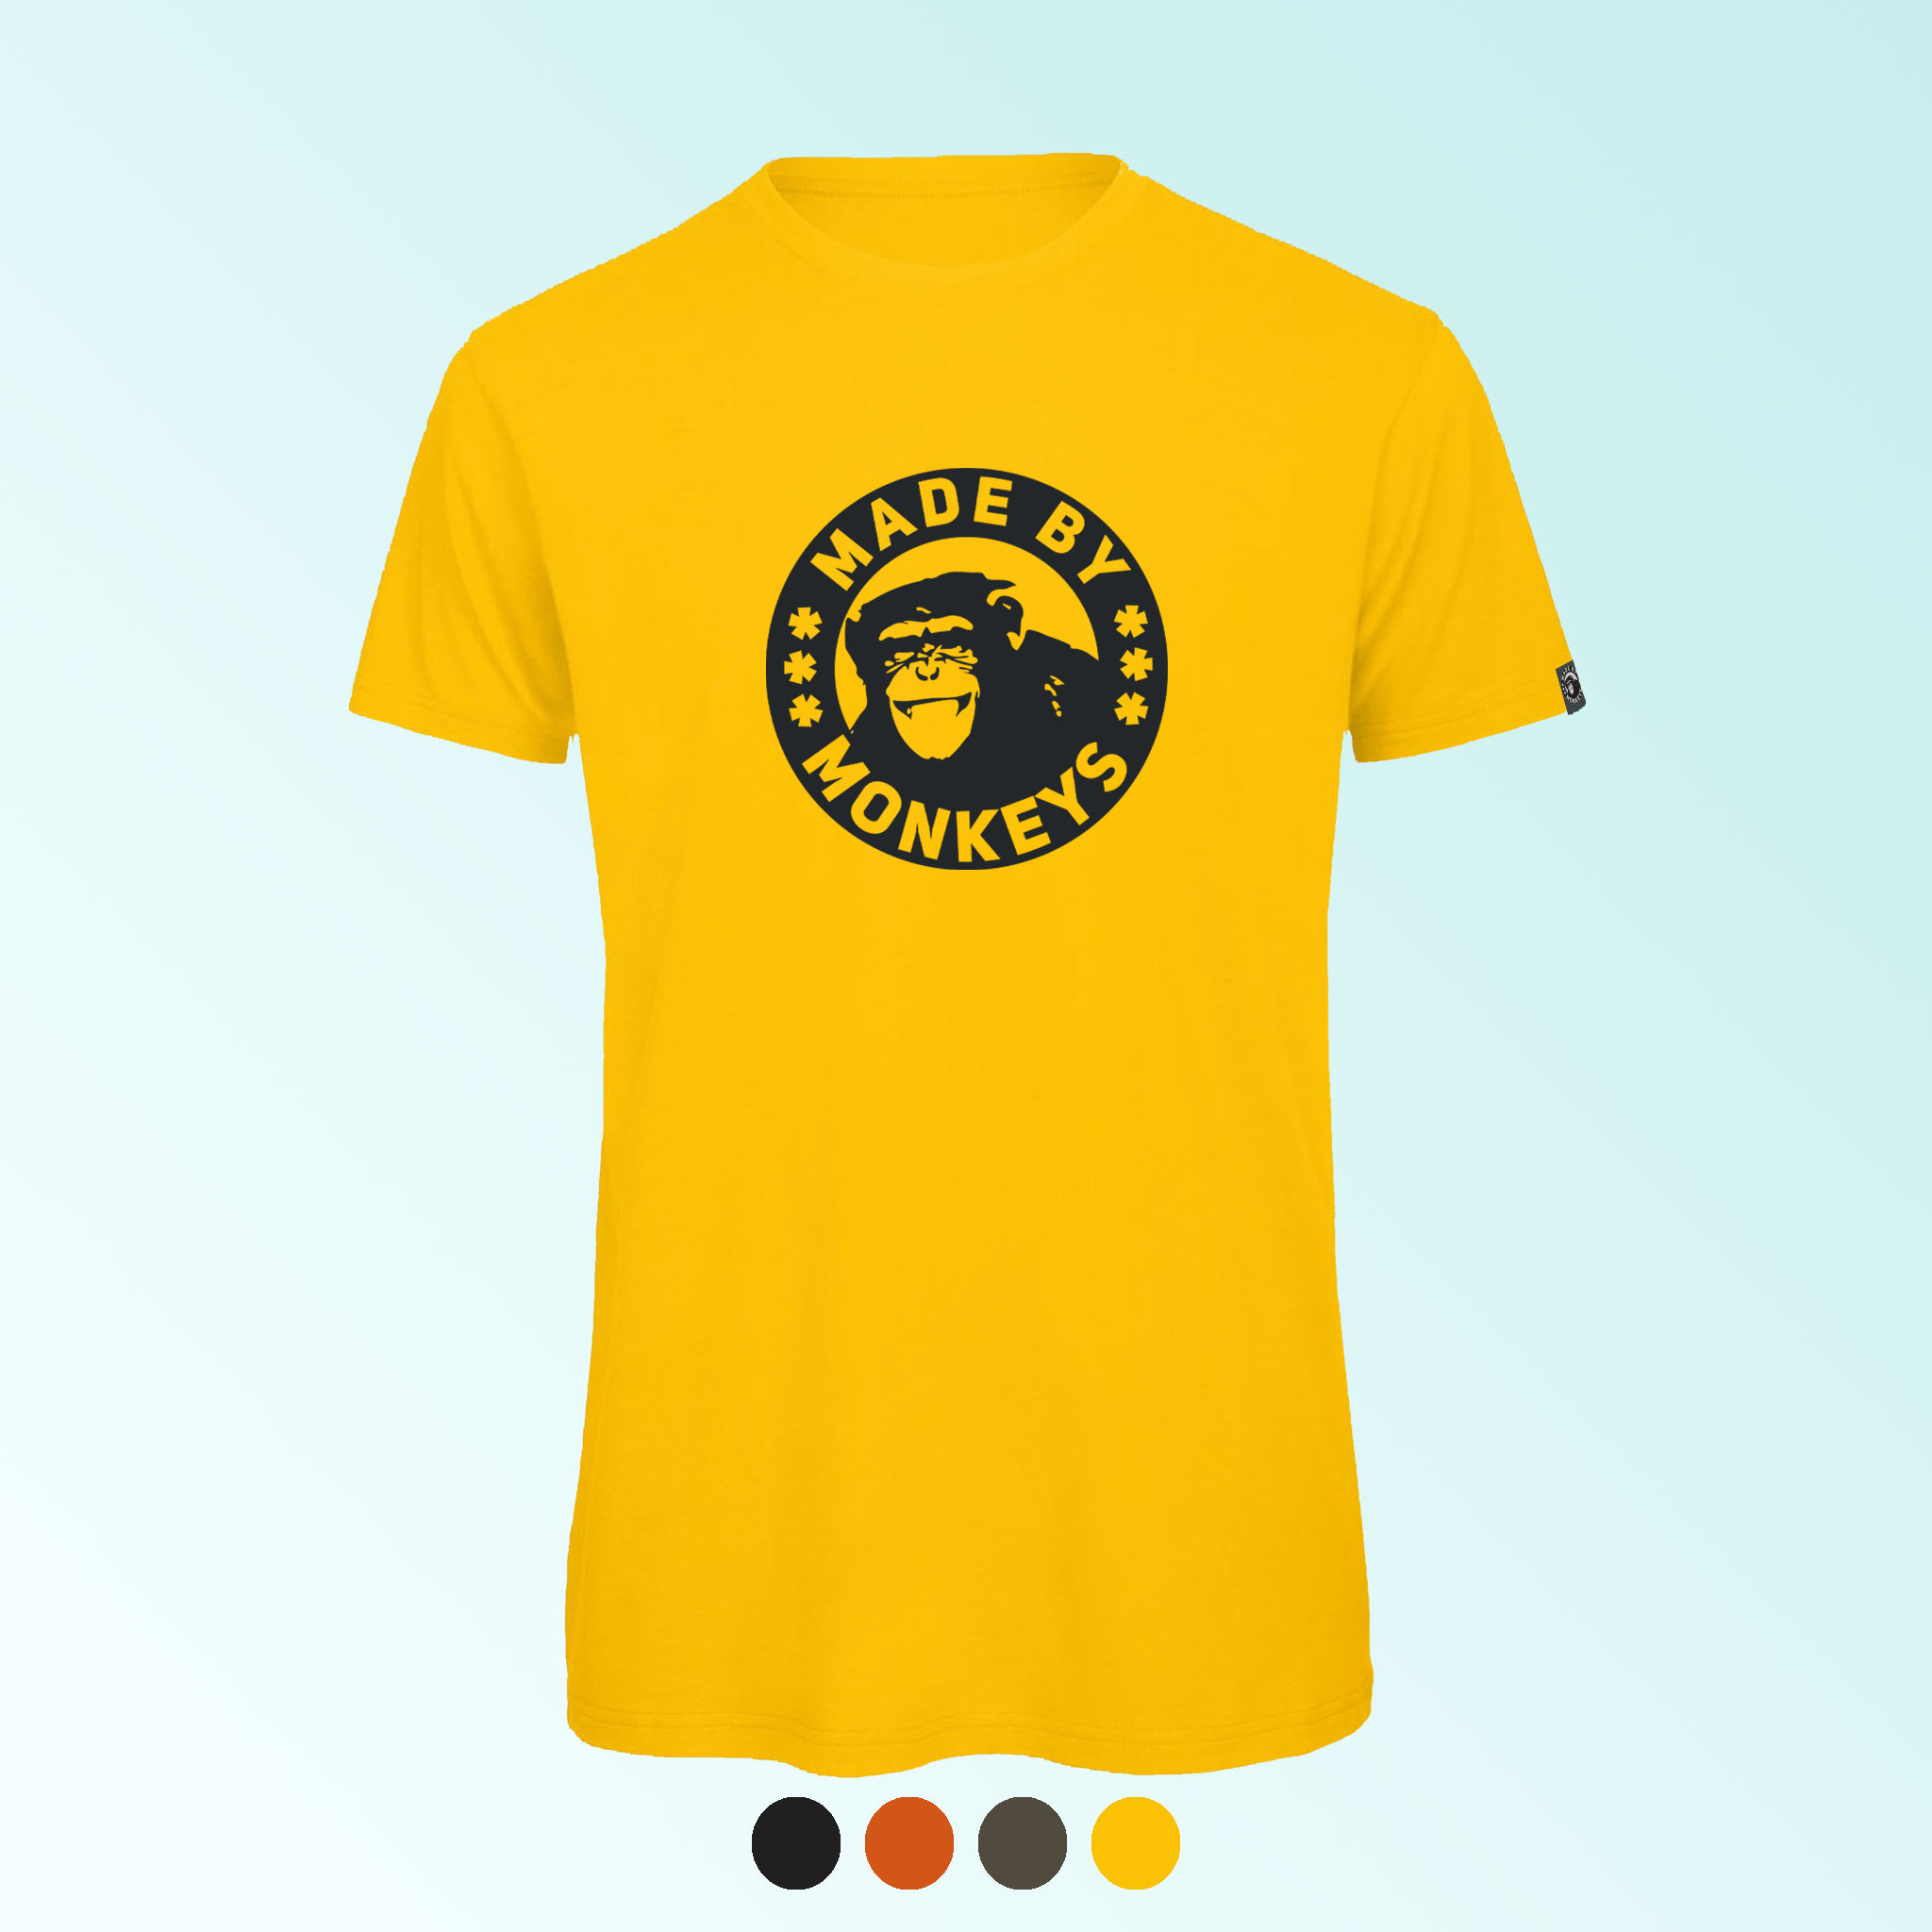 MBM Logo Shirt – Made By Monkeys